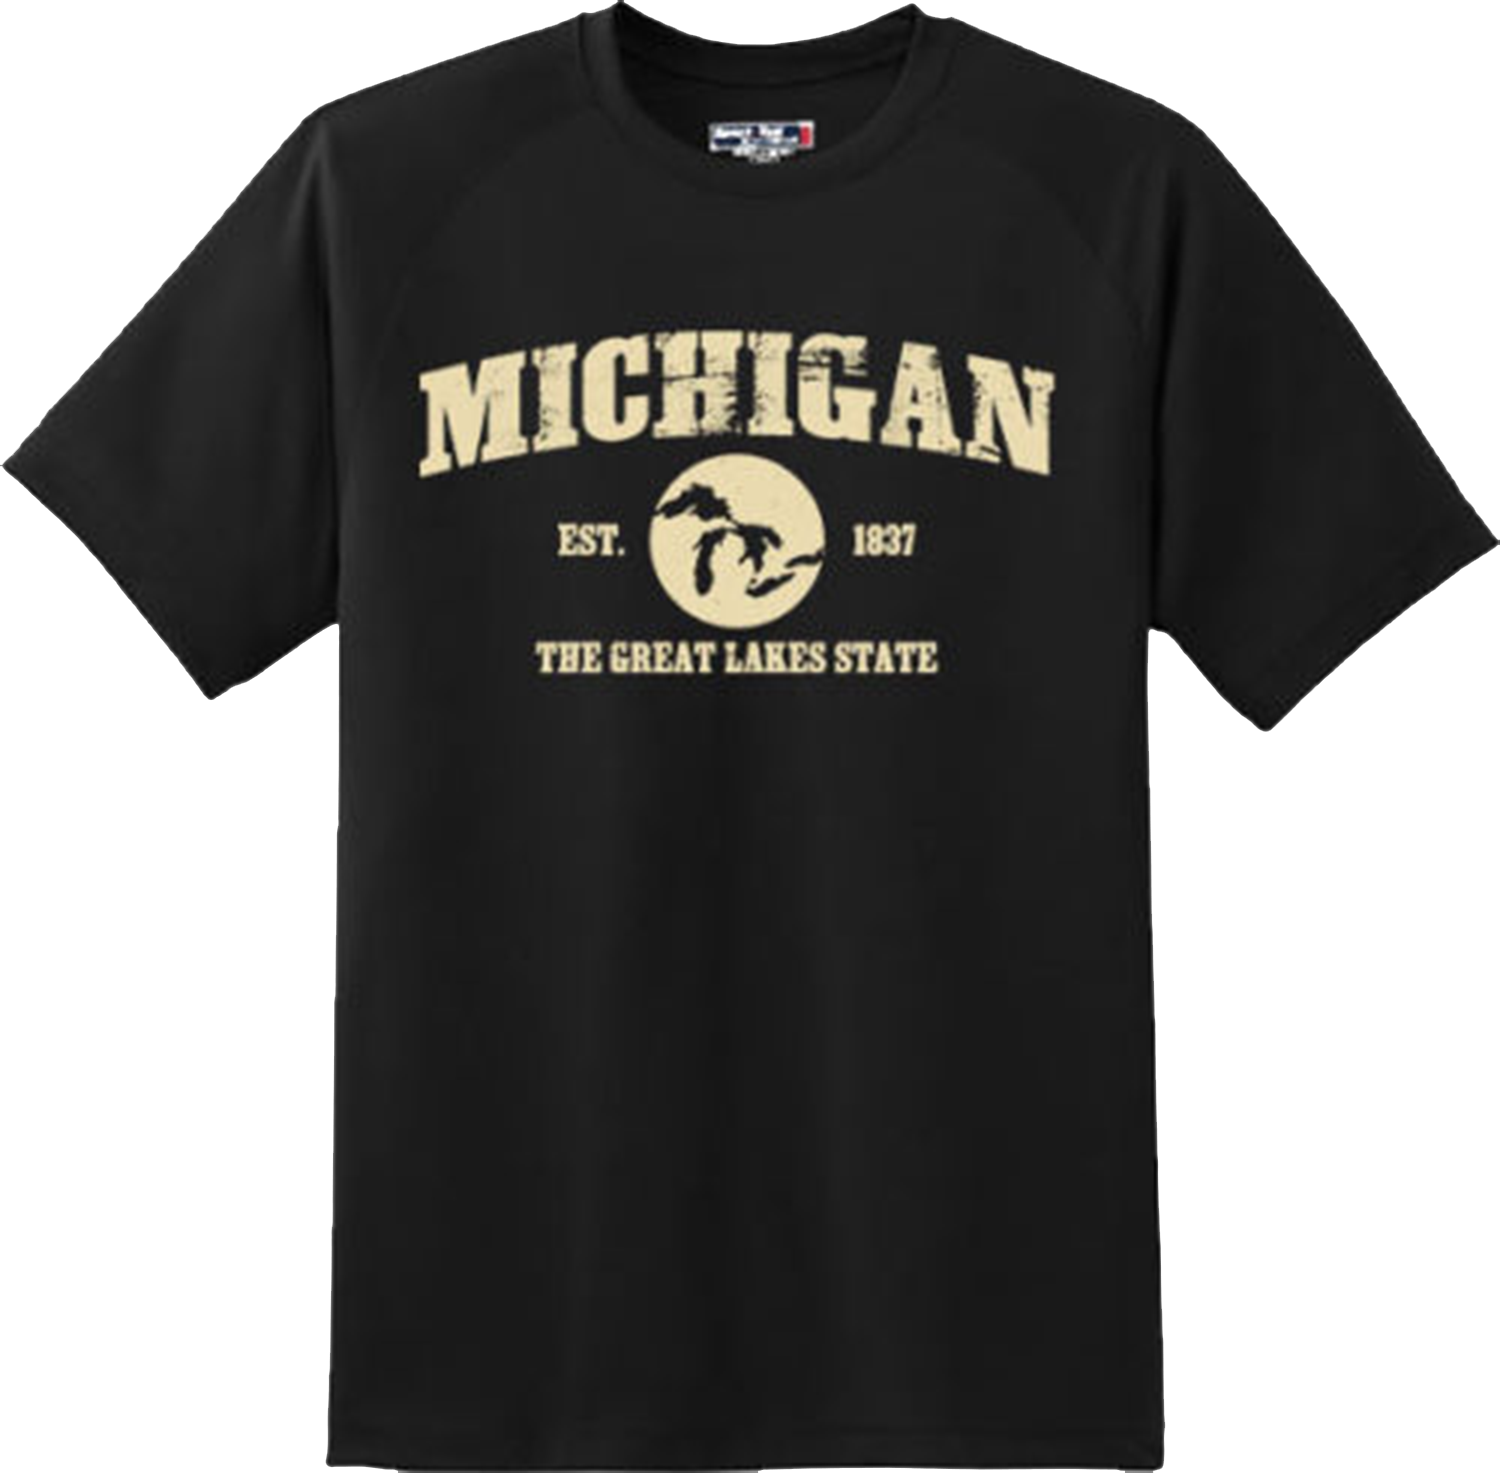 Michigan State Vintage Retro Hometown America Gift T Shirt New Graphic Tee